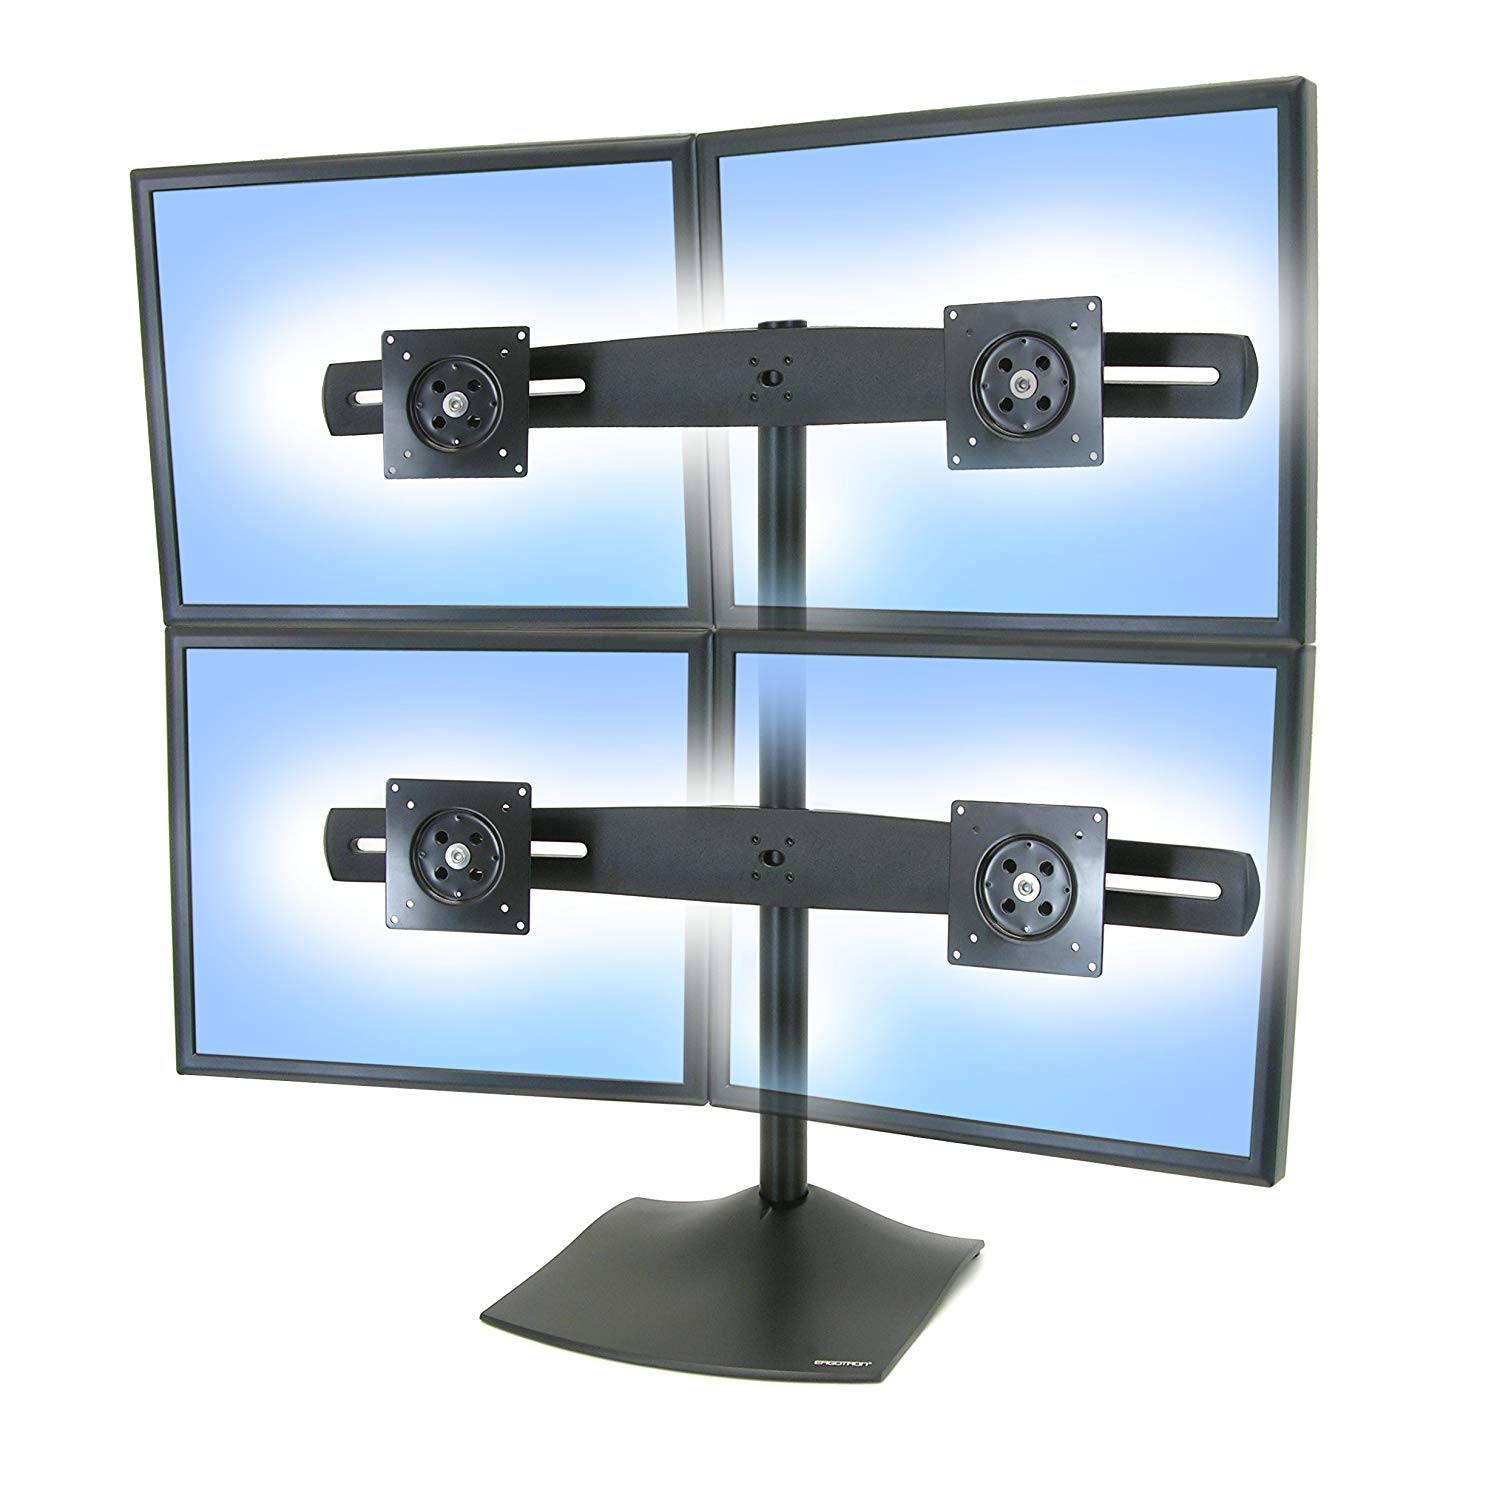 DS100 Quad-Monitor Desk Stand 33-324-200